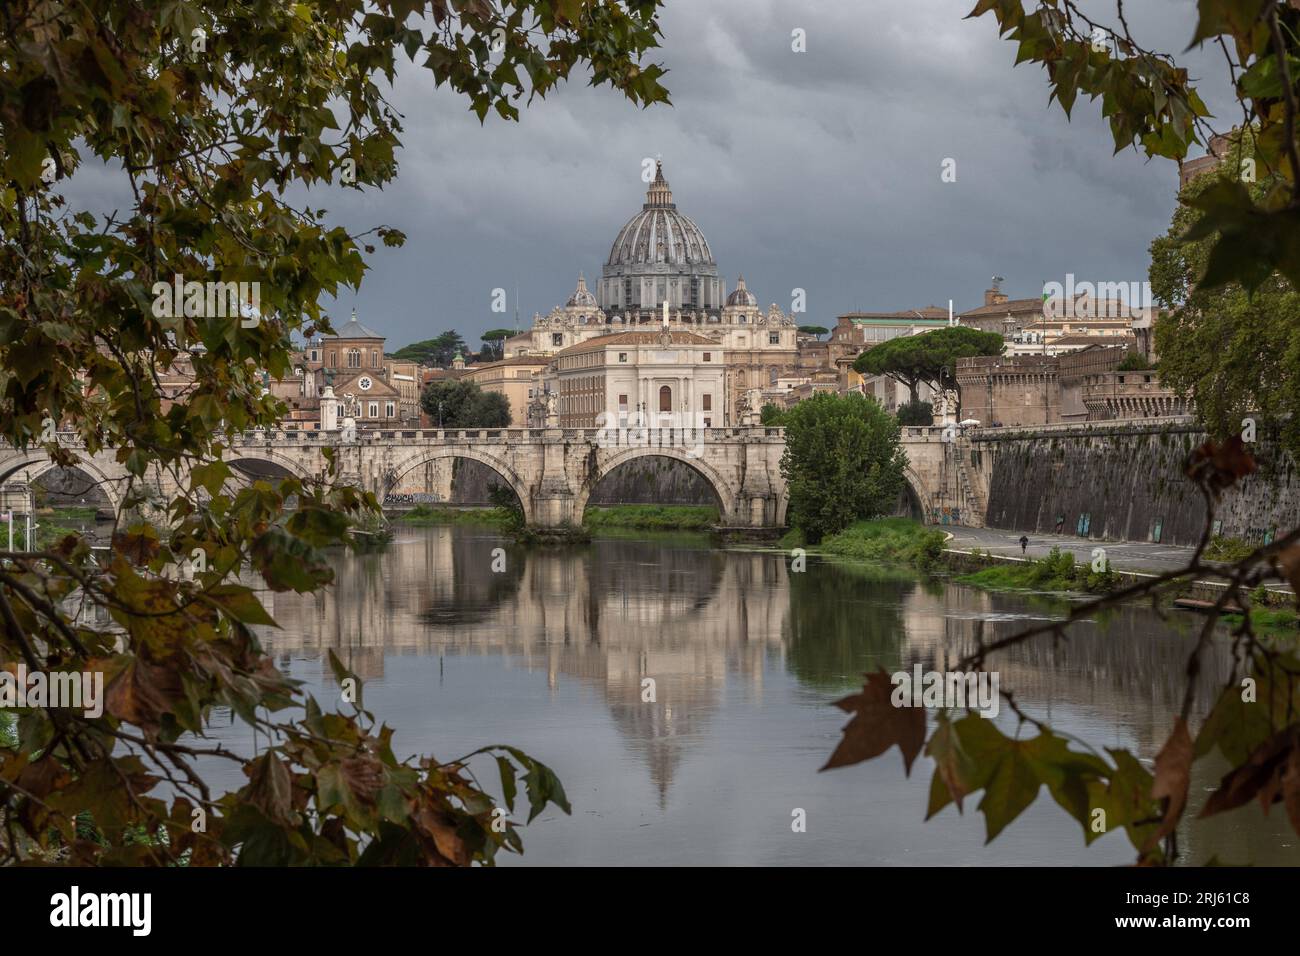 An historic bridge spanning a serene river near Vatican City Stock Photo